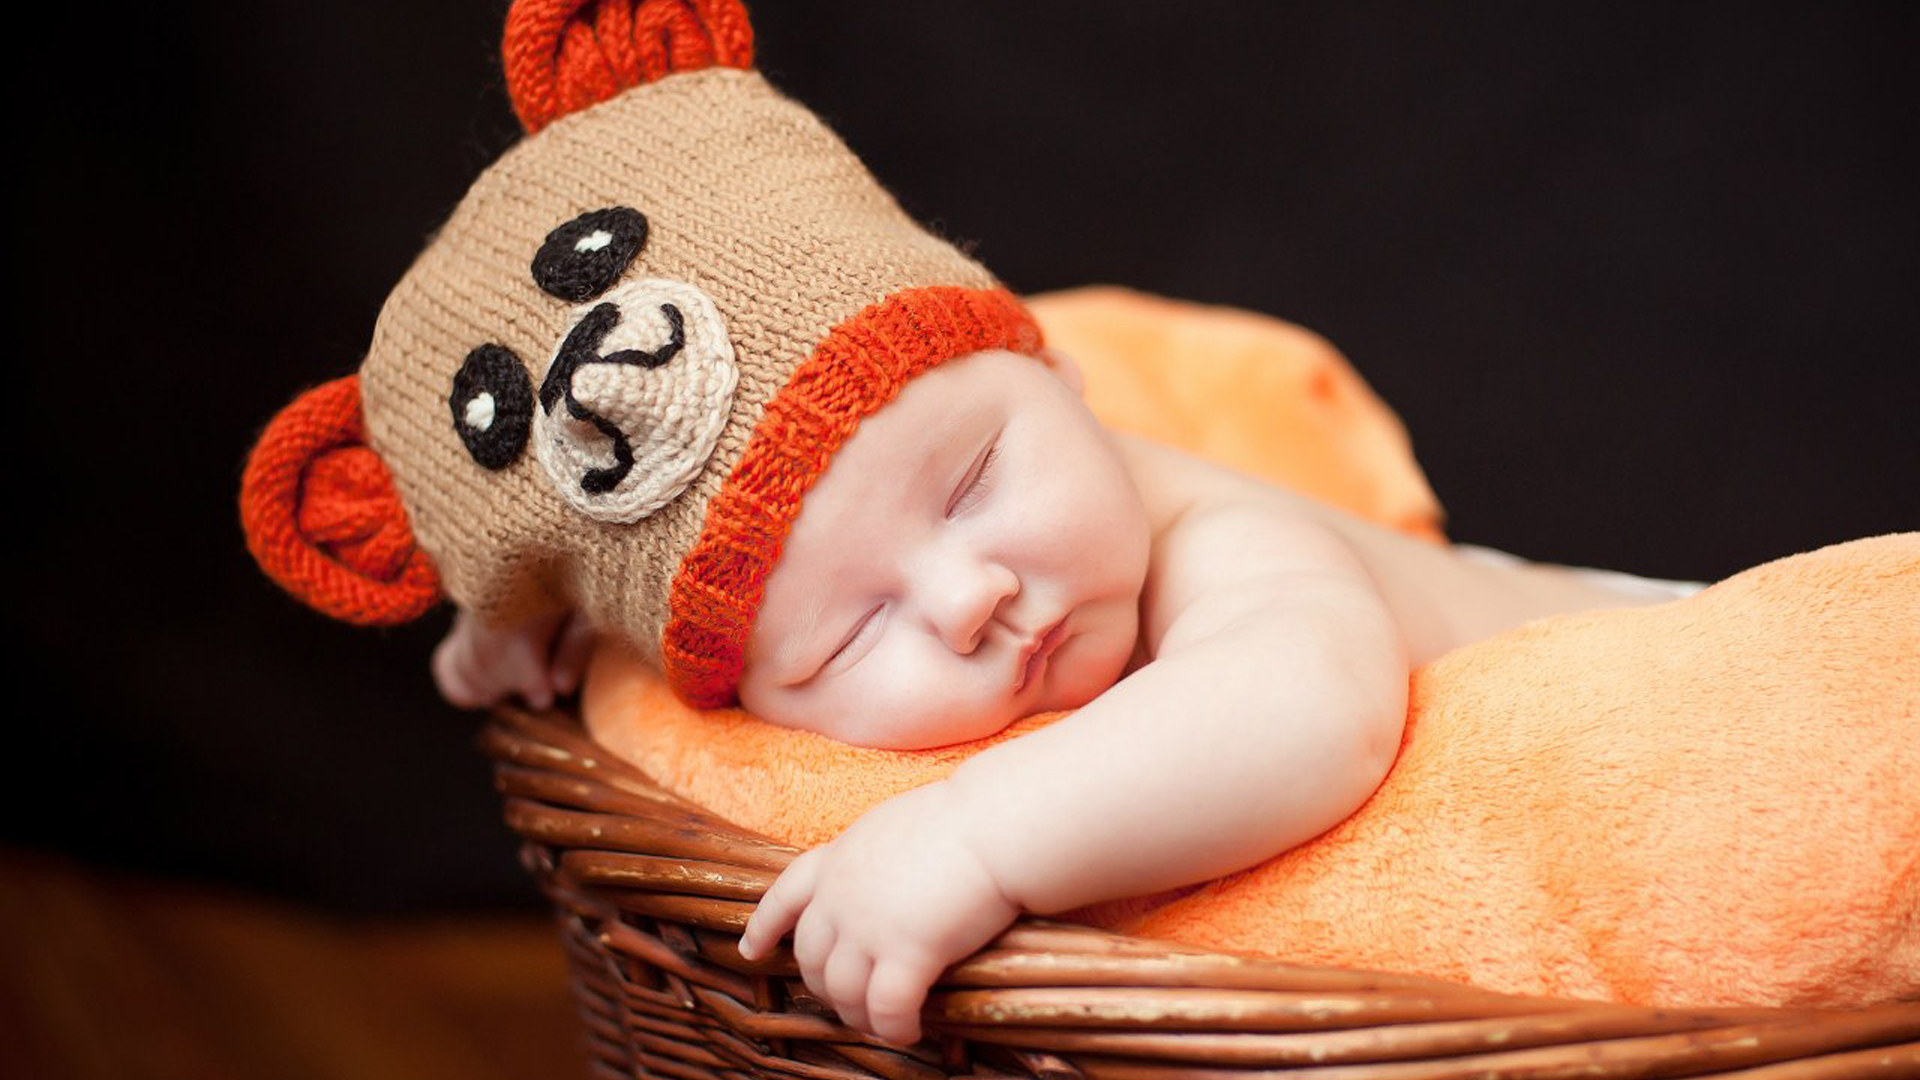 Cute Baby Toddler Is Sleeping Inside Wood Basket On Soft Light Orange Towel Wearing Woolen Knitted Cap In Dark Wallpaper 2K Cute